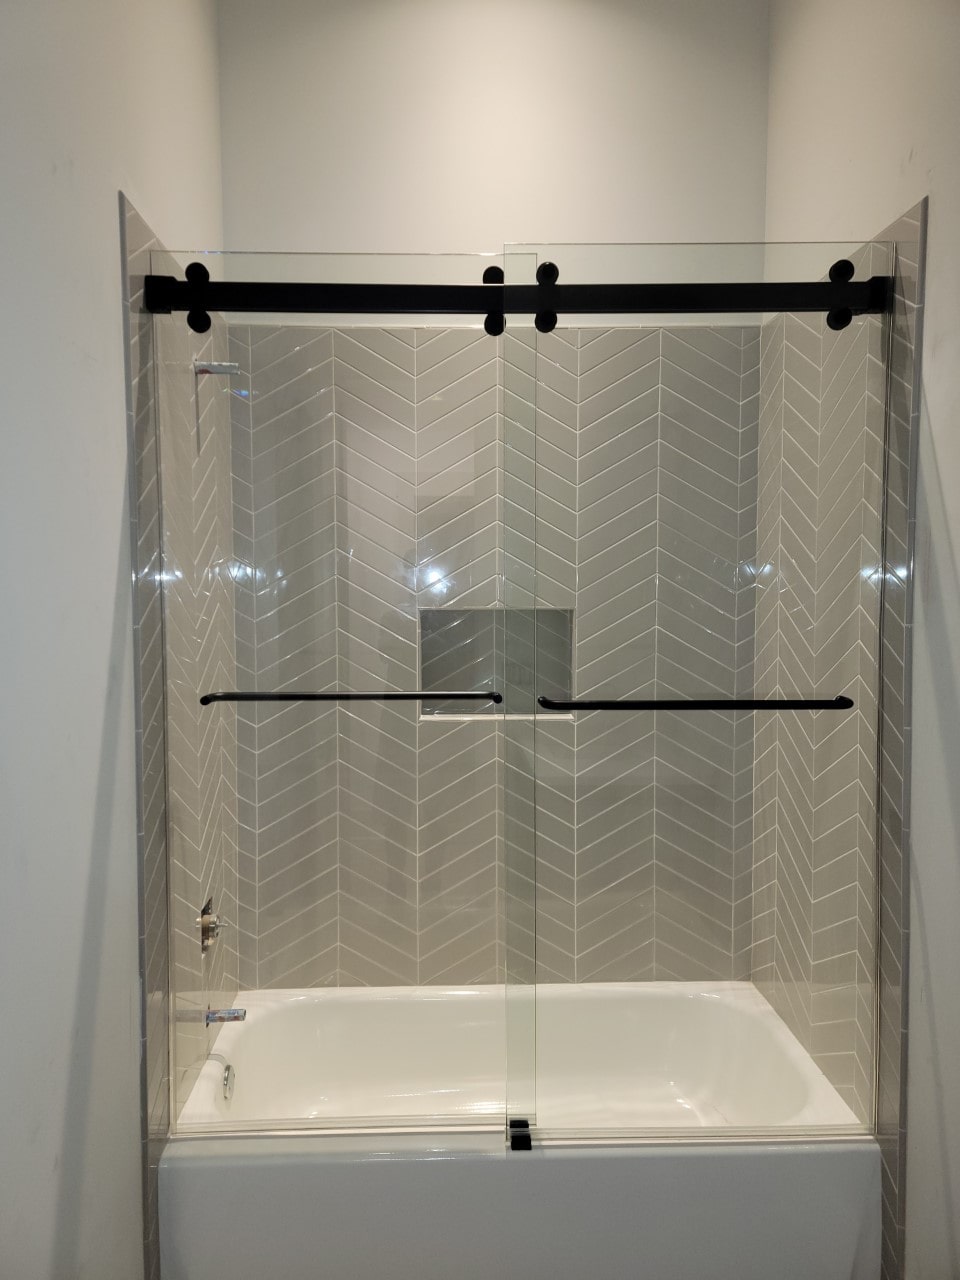 Glass Shower Area With Bathtub